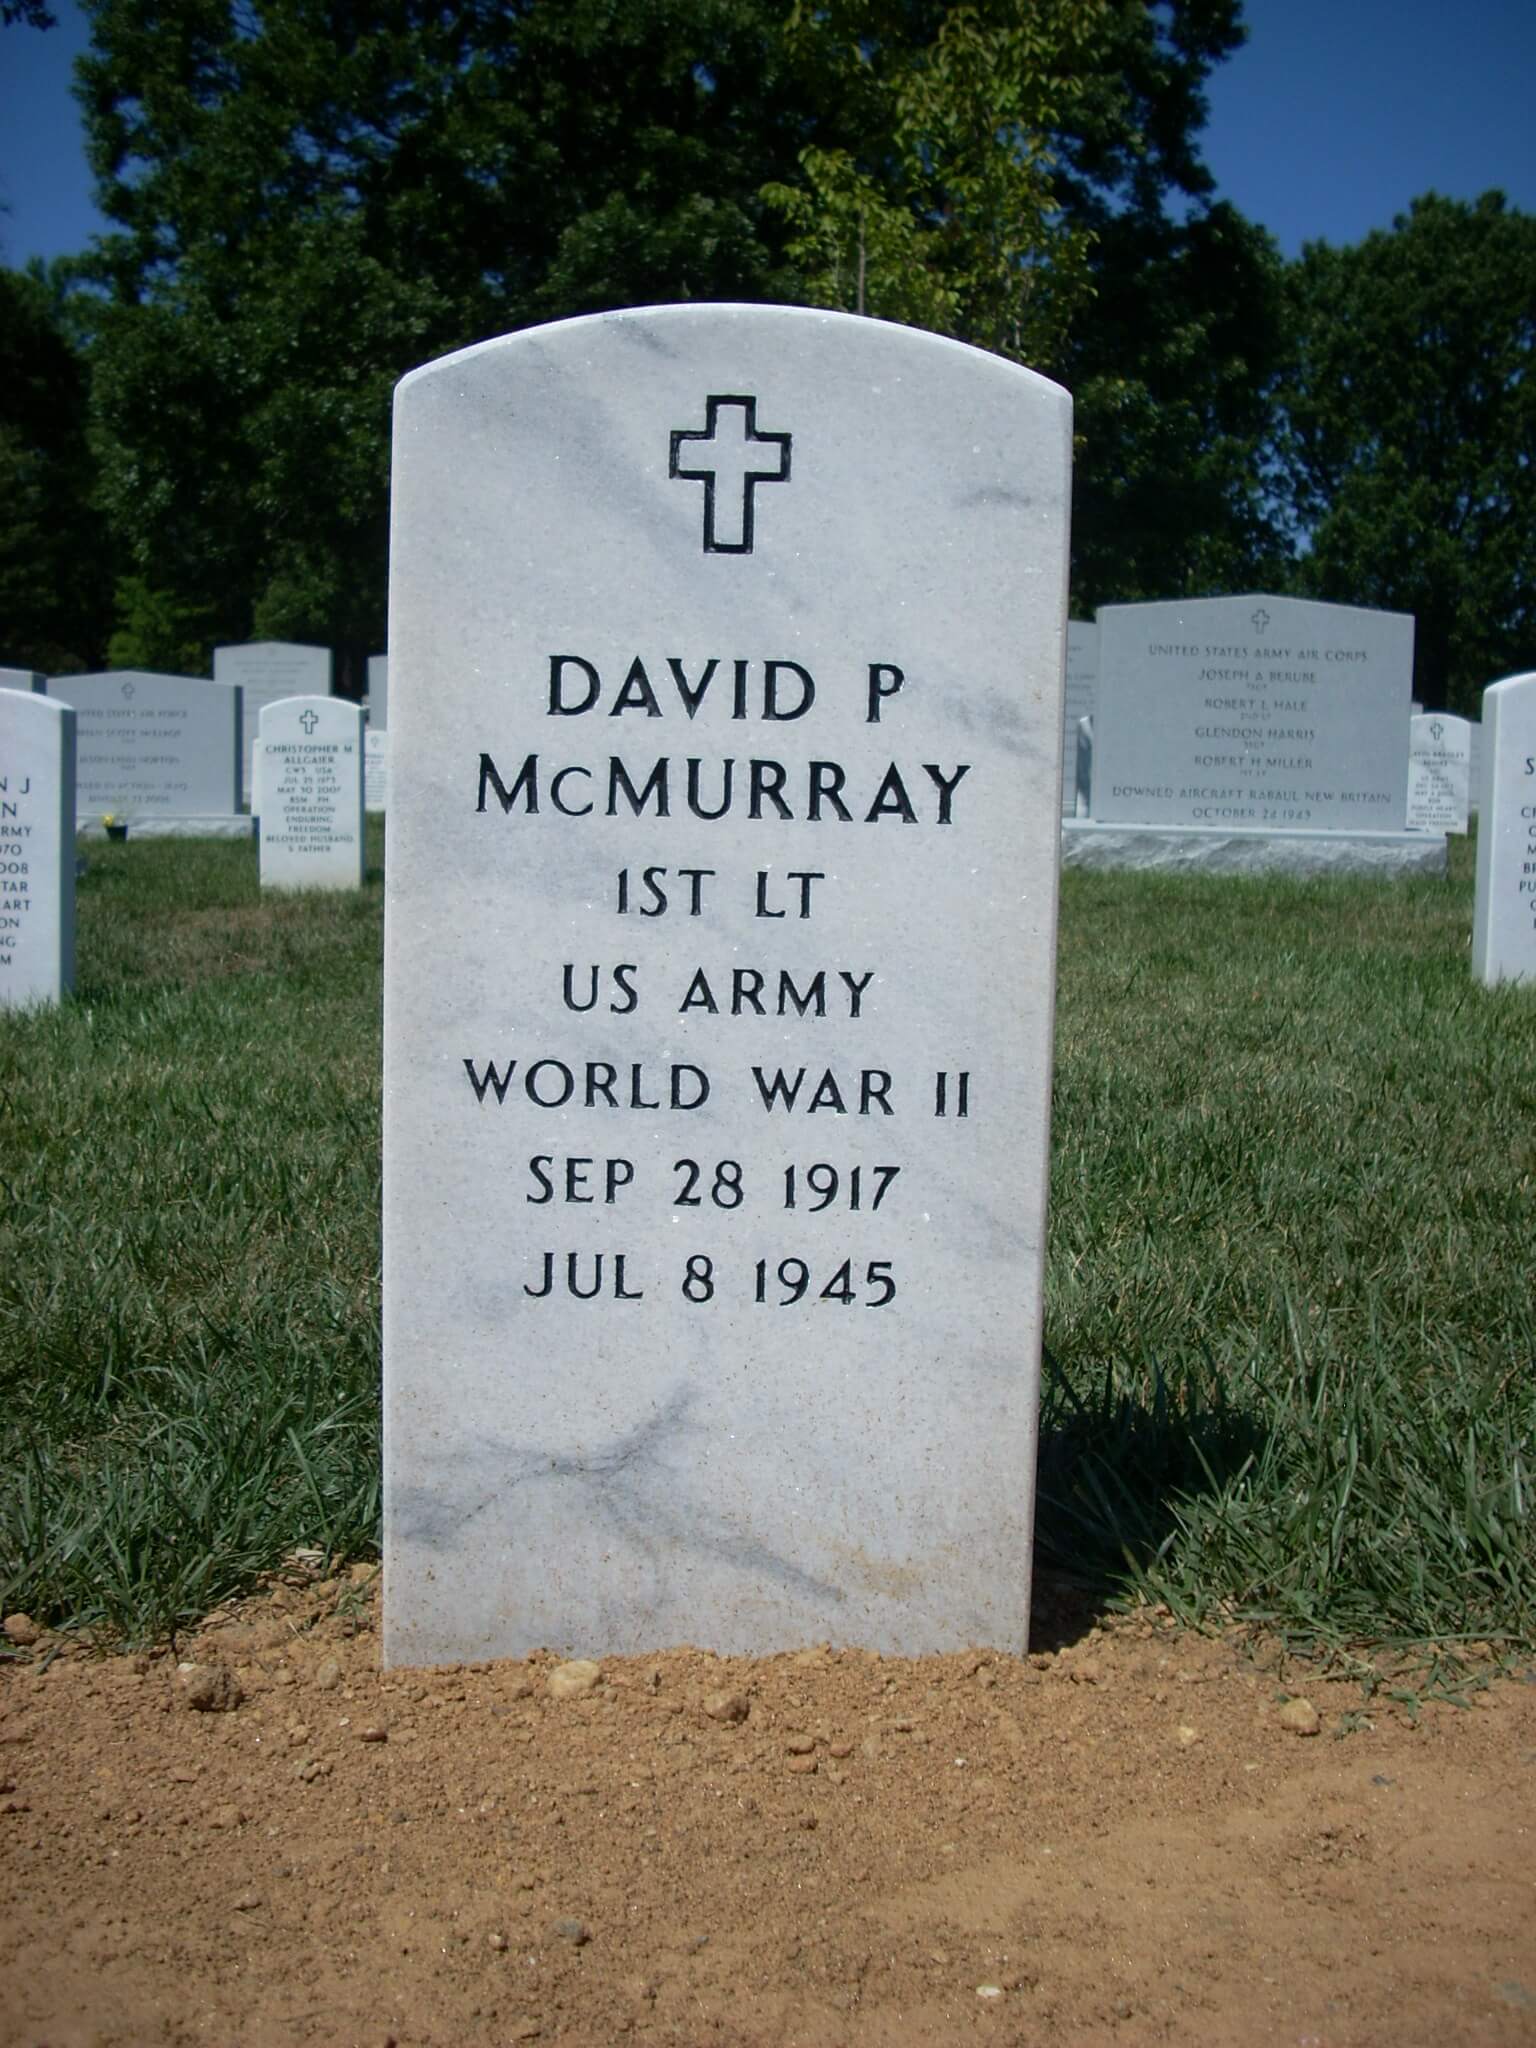 dpmcmurray-gravesite-photo-august-2008-001